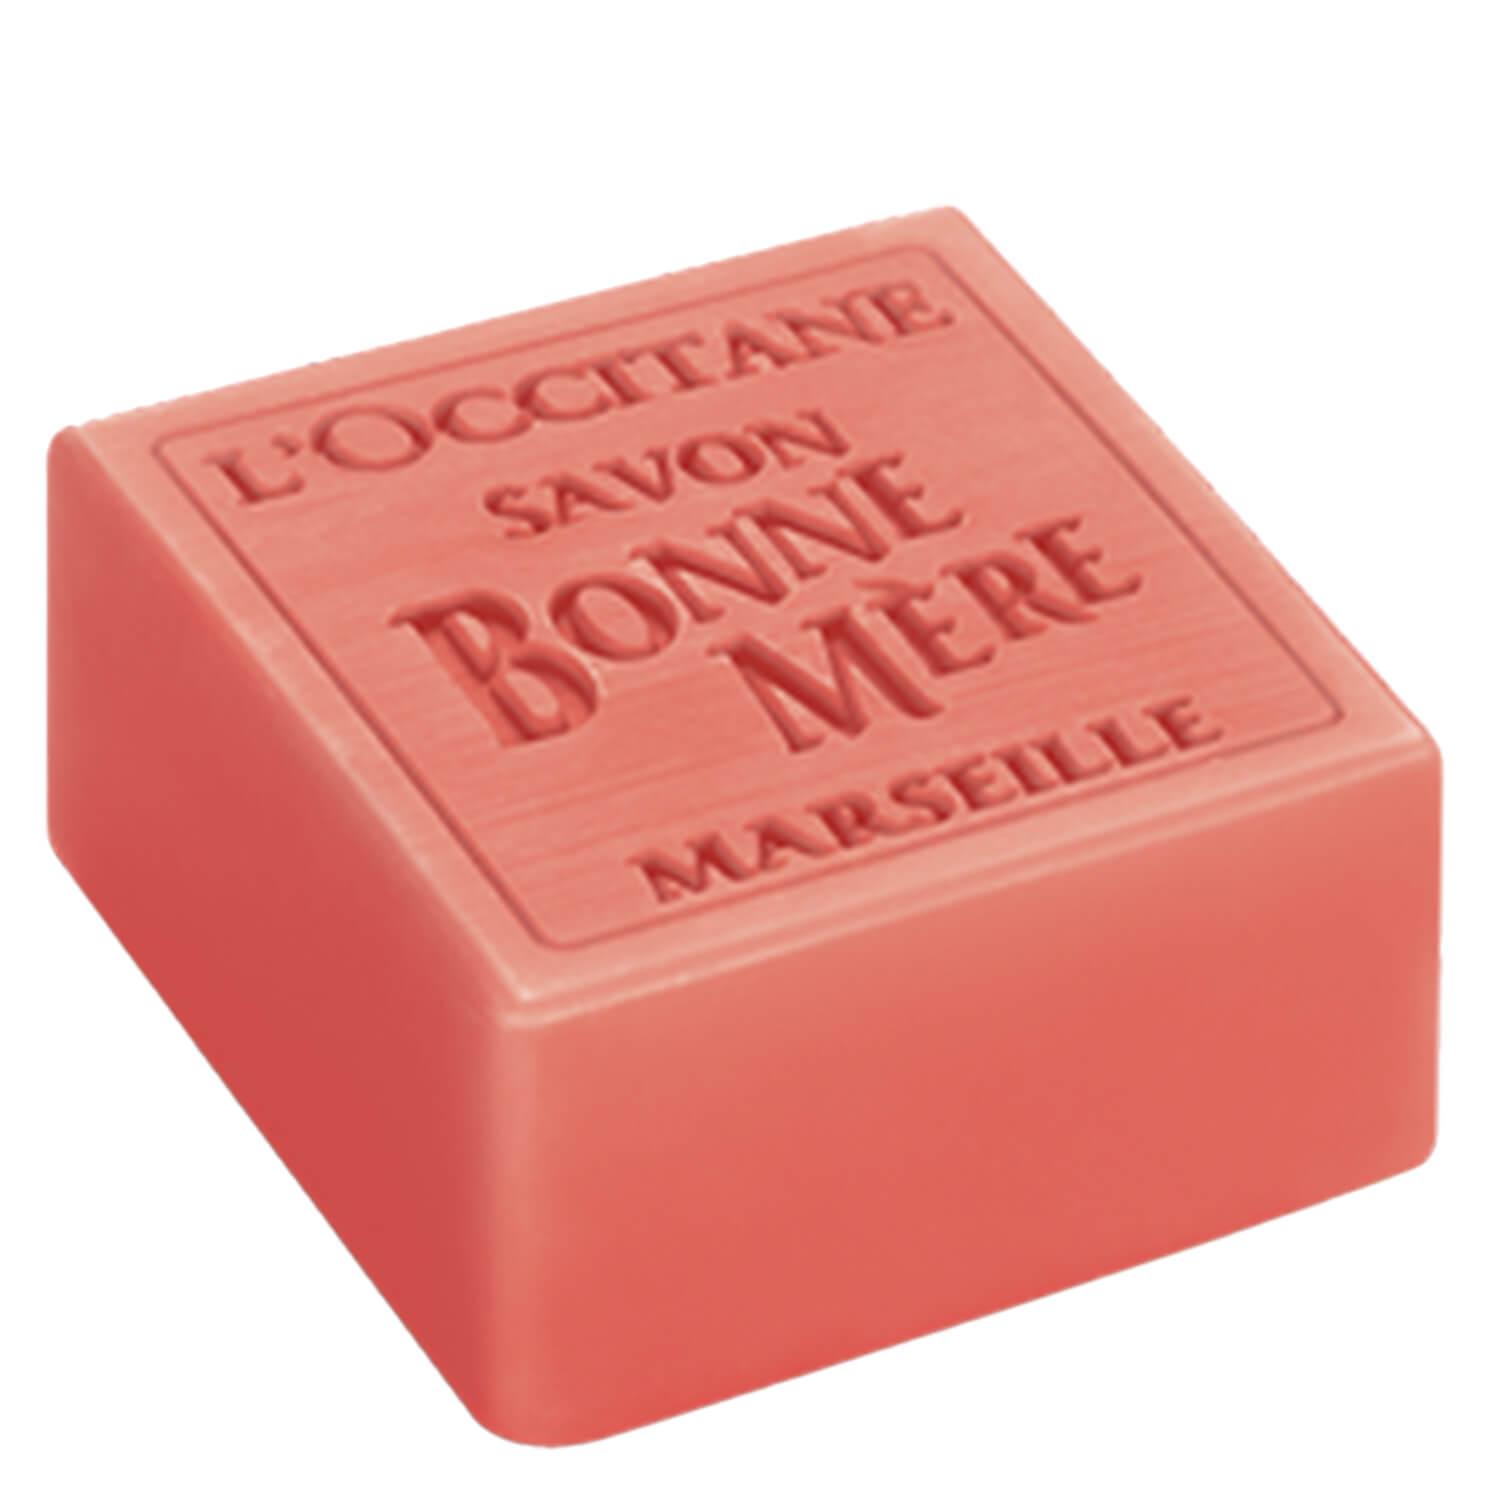 L'Occitane Hand - BM Rhubarb with Basil Soap